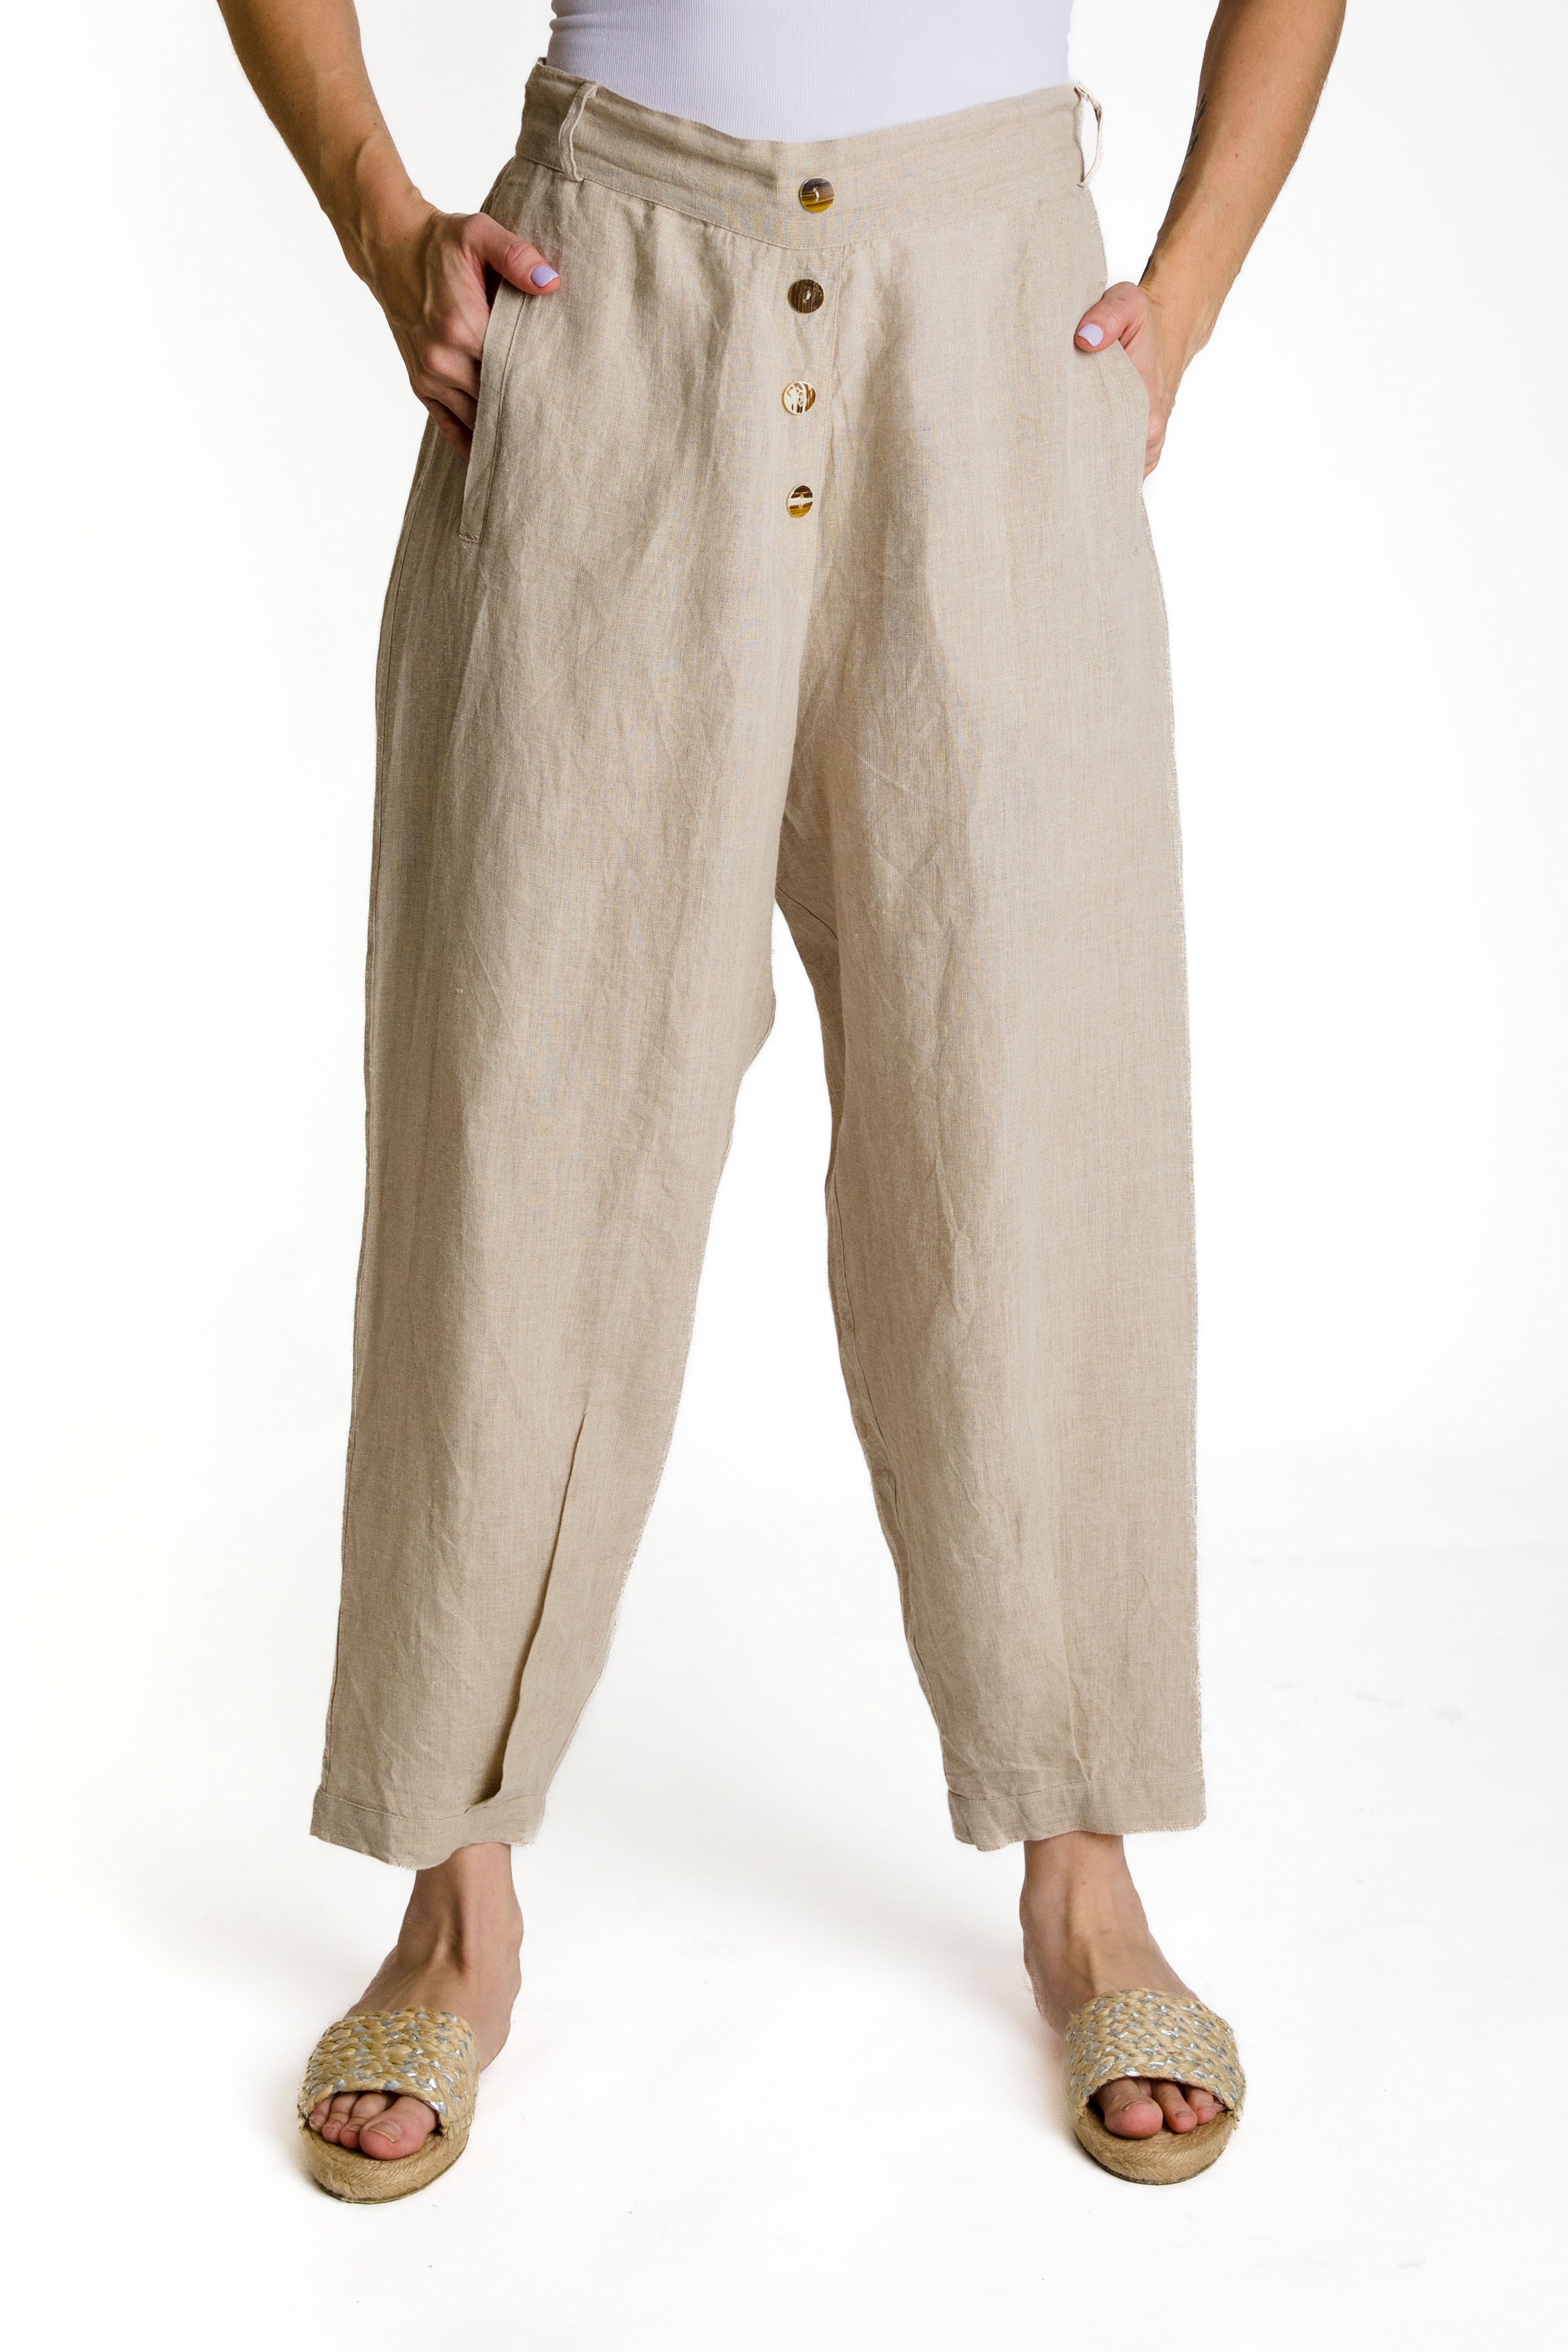 Limbani Pants in Latte – Imagine Fashion